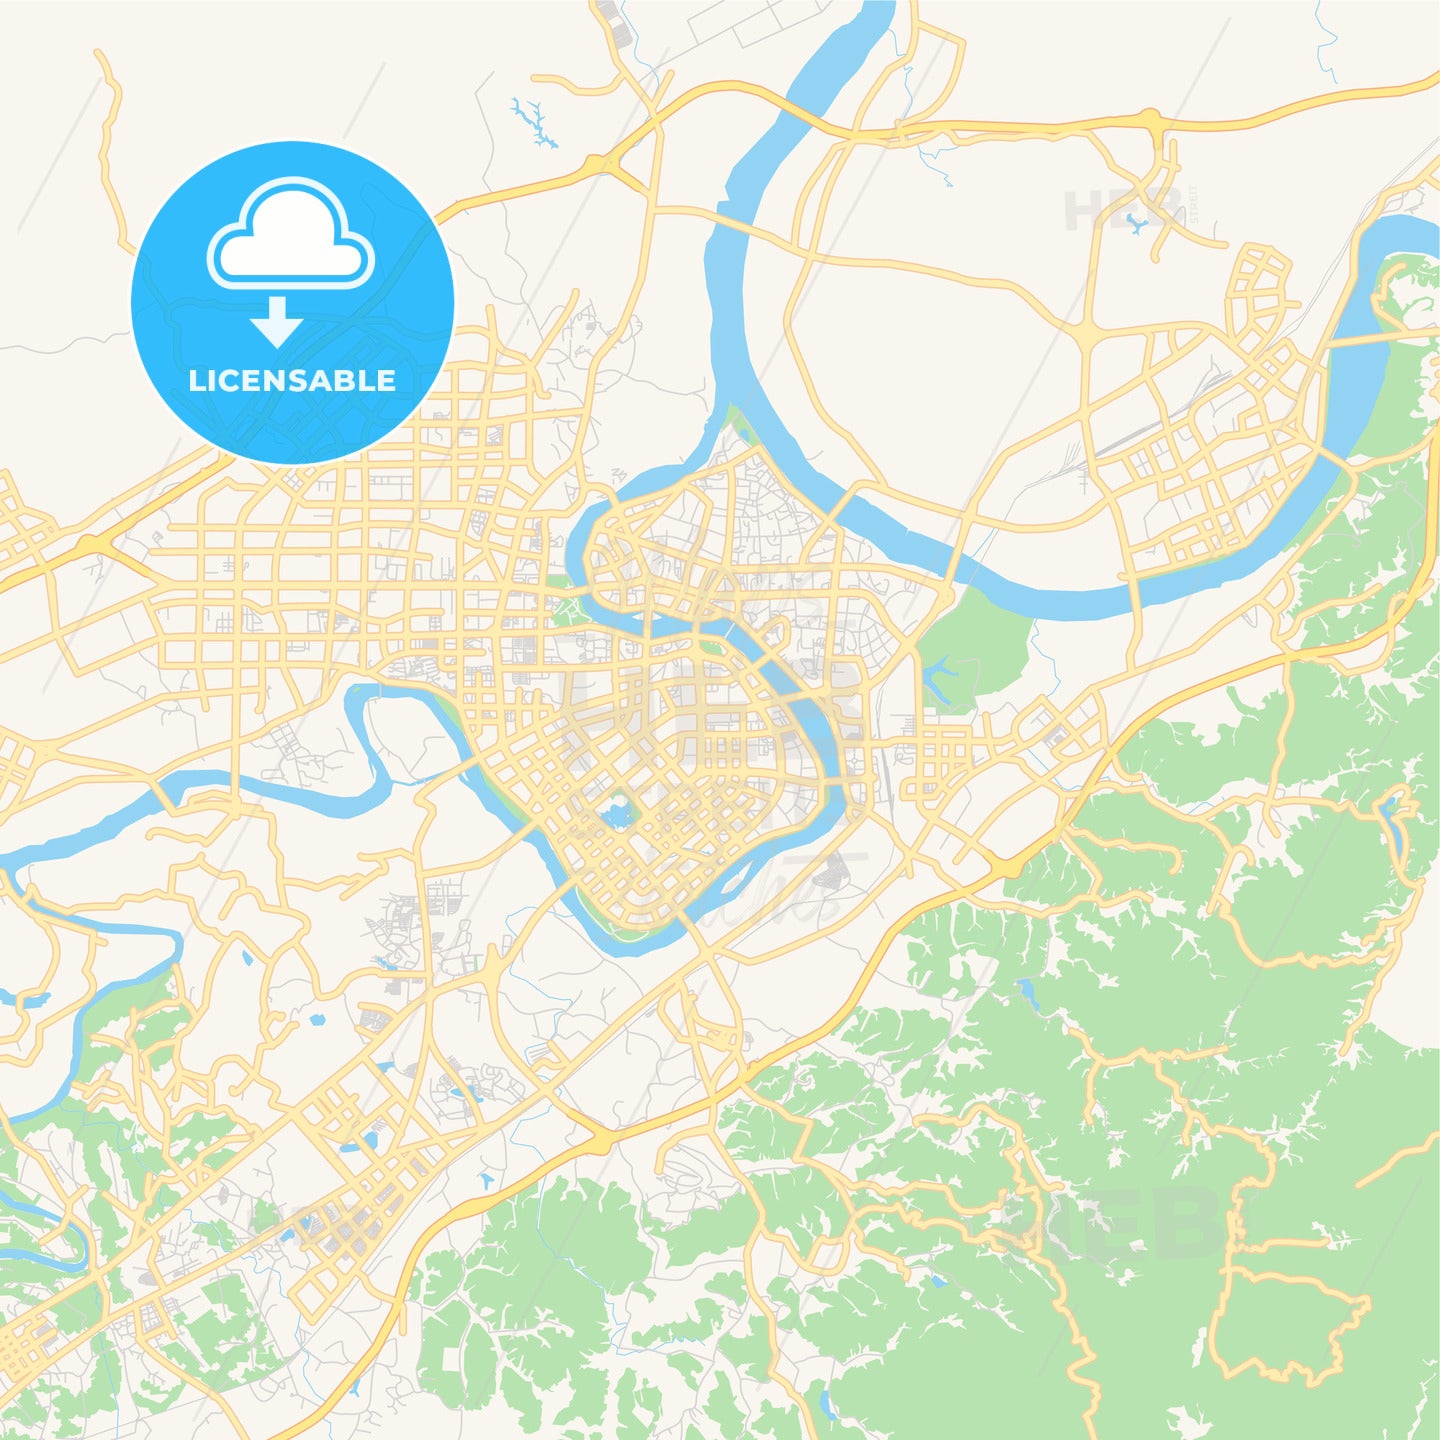 Printable street map of Ganzhou, China